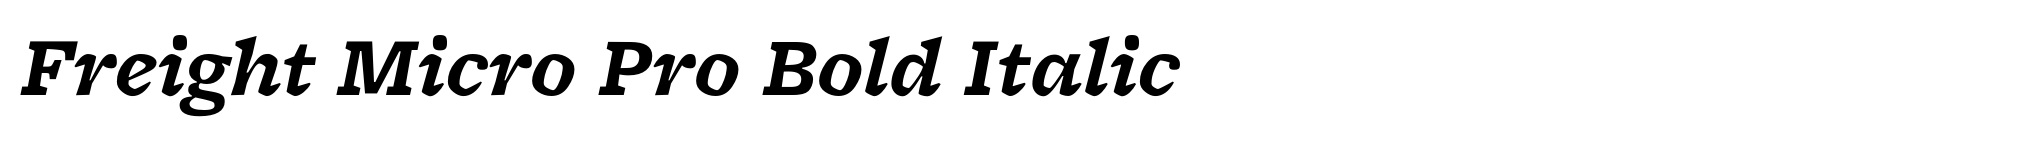 Freight Micro Pro Bold Italic image